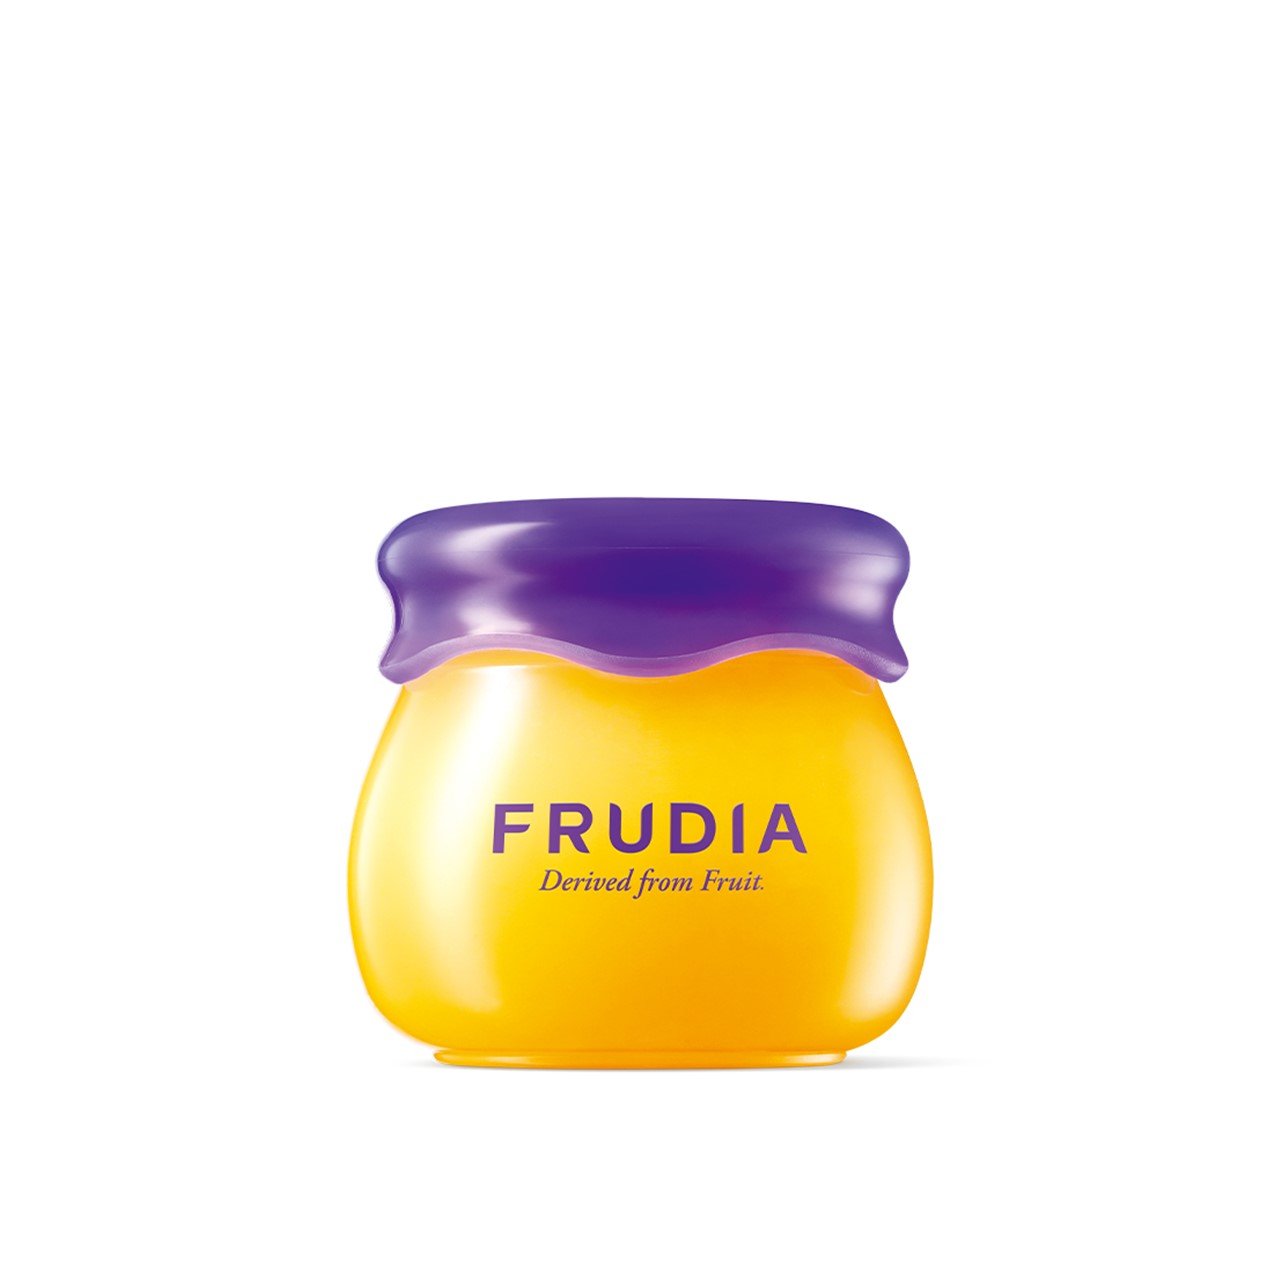 Frudia Blueberry Hydrating Honey Lip Balm 10ml (0.33 fl oz)